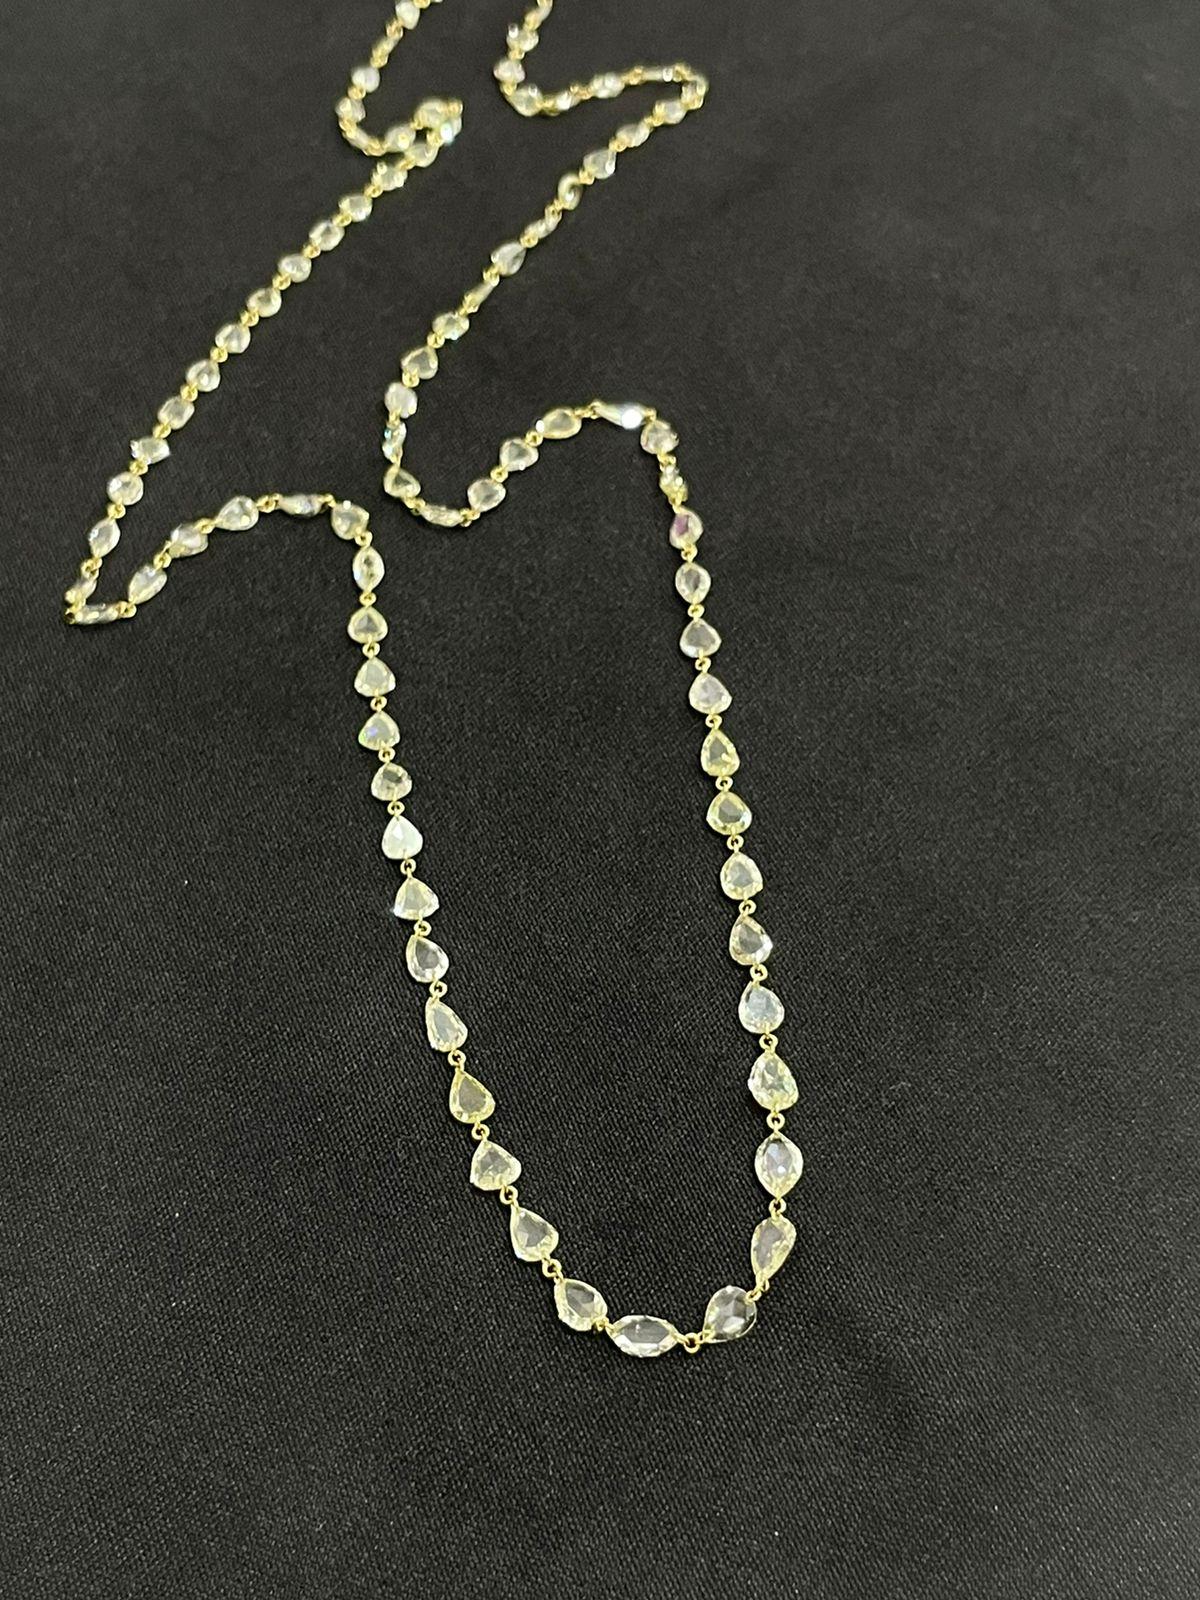 PANIM 11.43 Cts Fancy Rosecut Diamond Necklace in 18 Karat White Gold For Sale 1